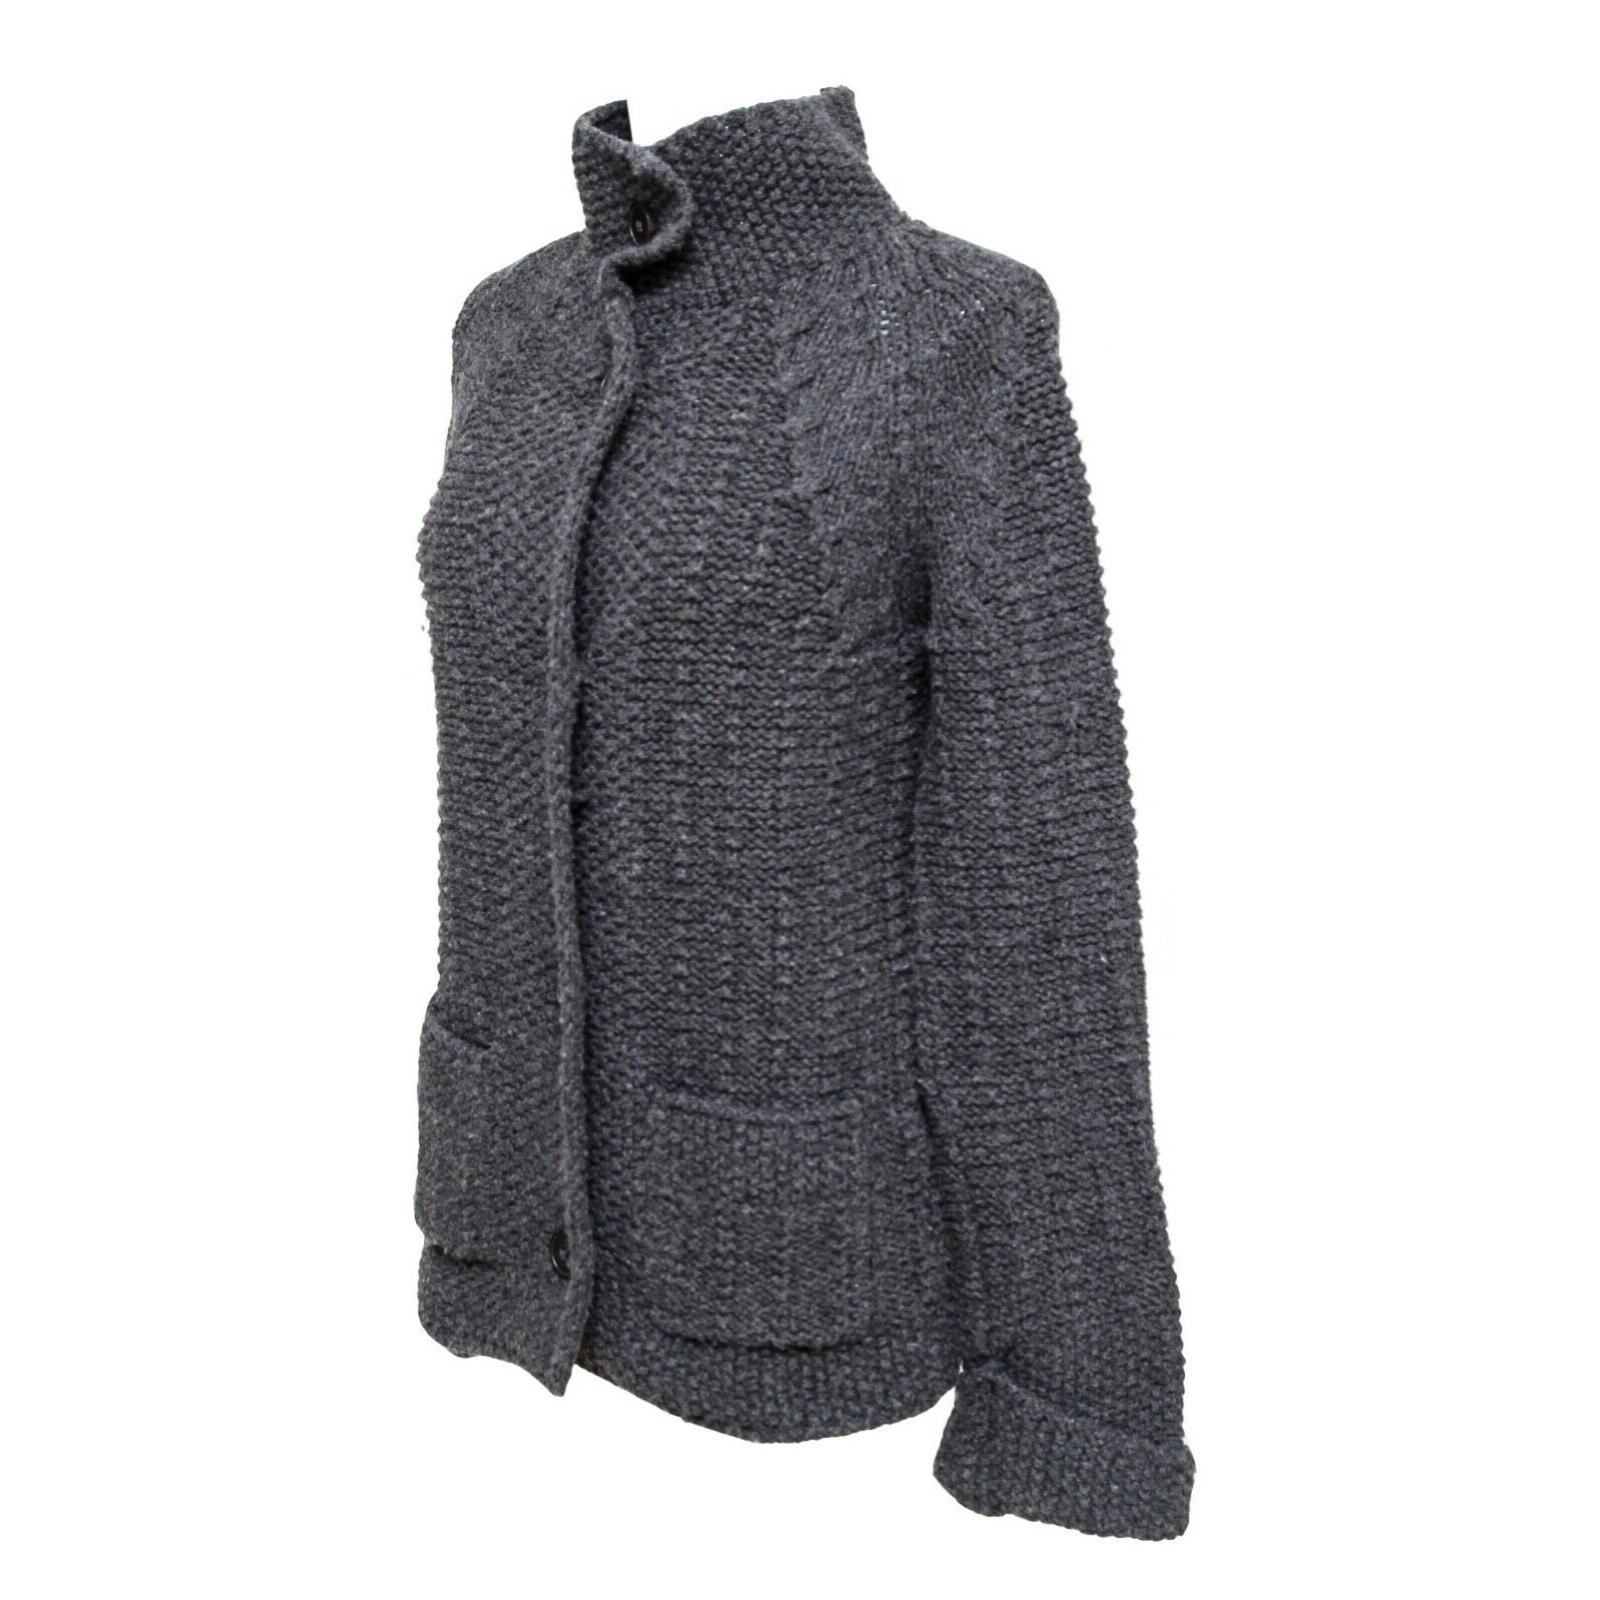 Black CHLOE Sweater Cardigan Knit Jacket CHARCOAL GREY Long Sleeve Sz XS 2011 For Sale